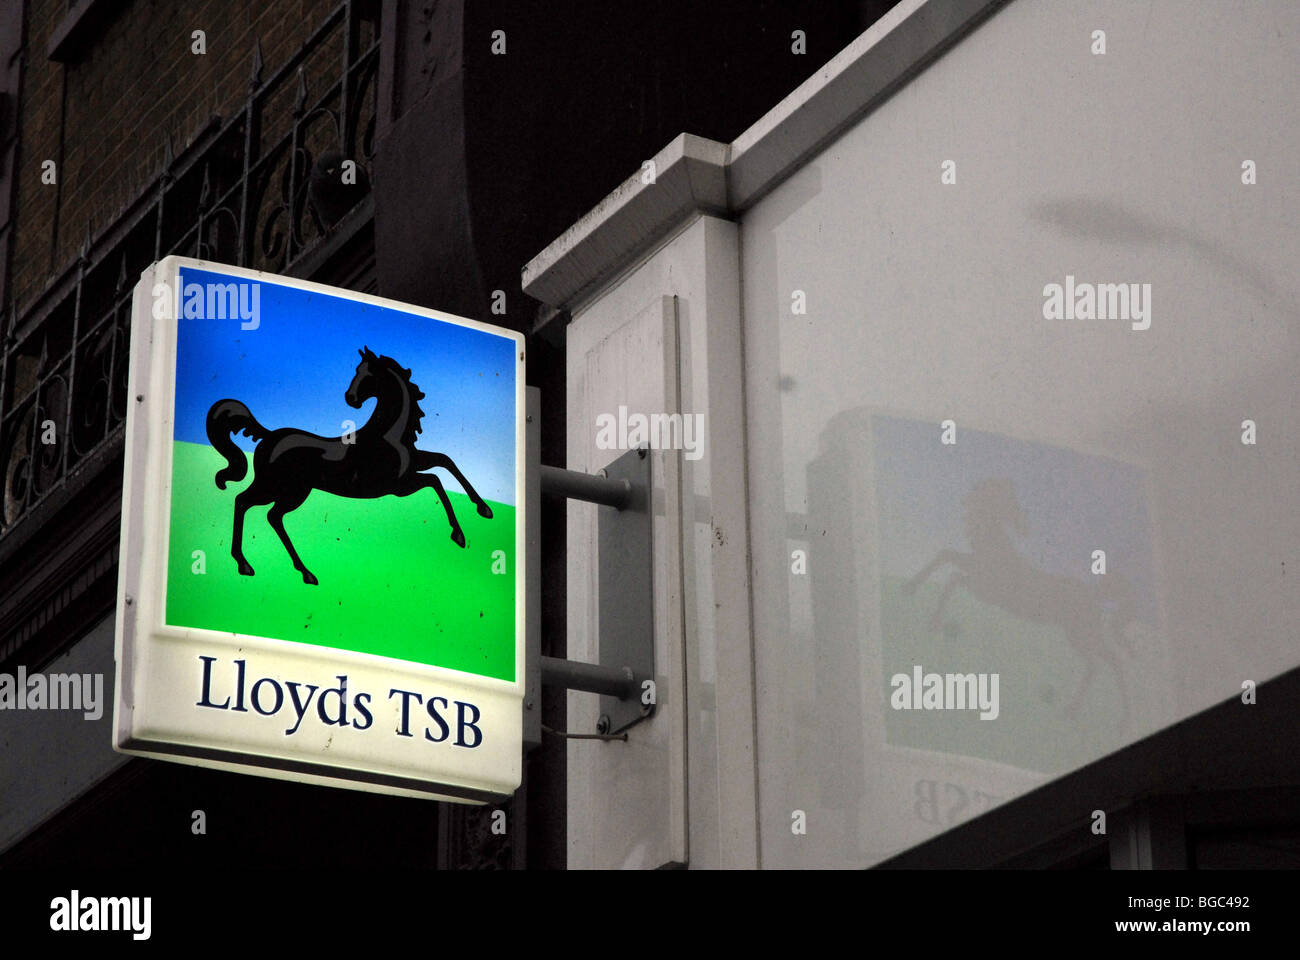 Lloyds tsb sign Stock Photo